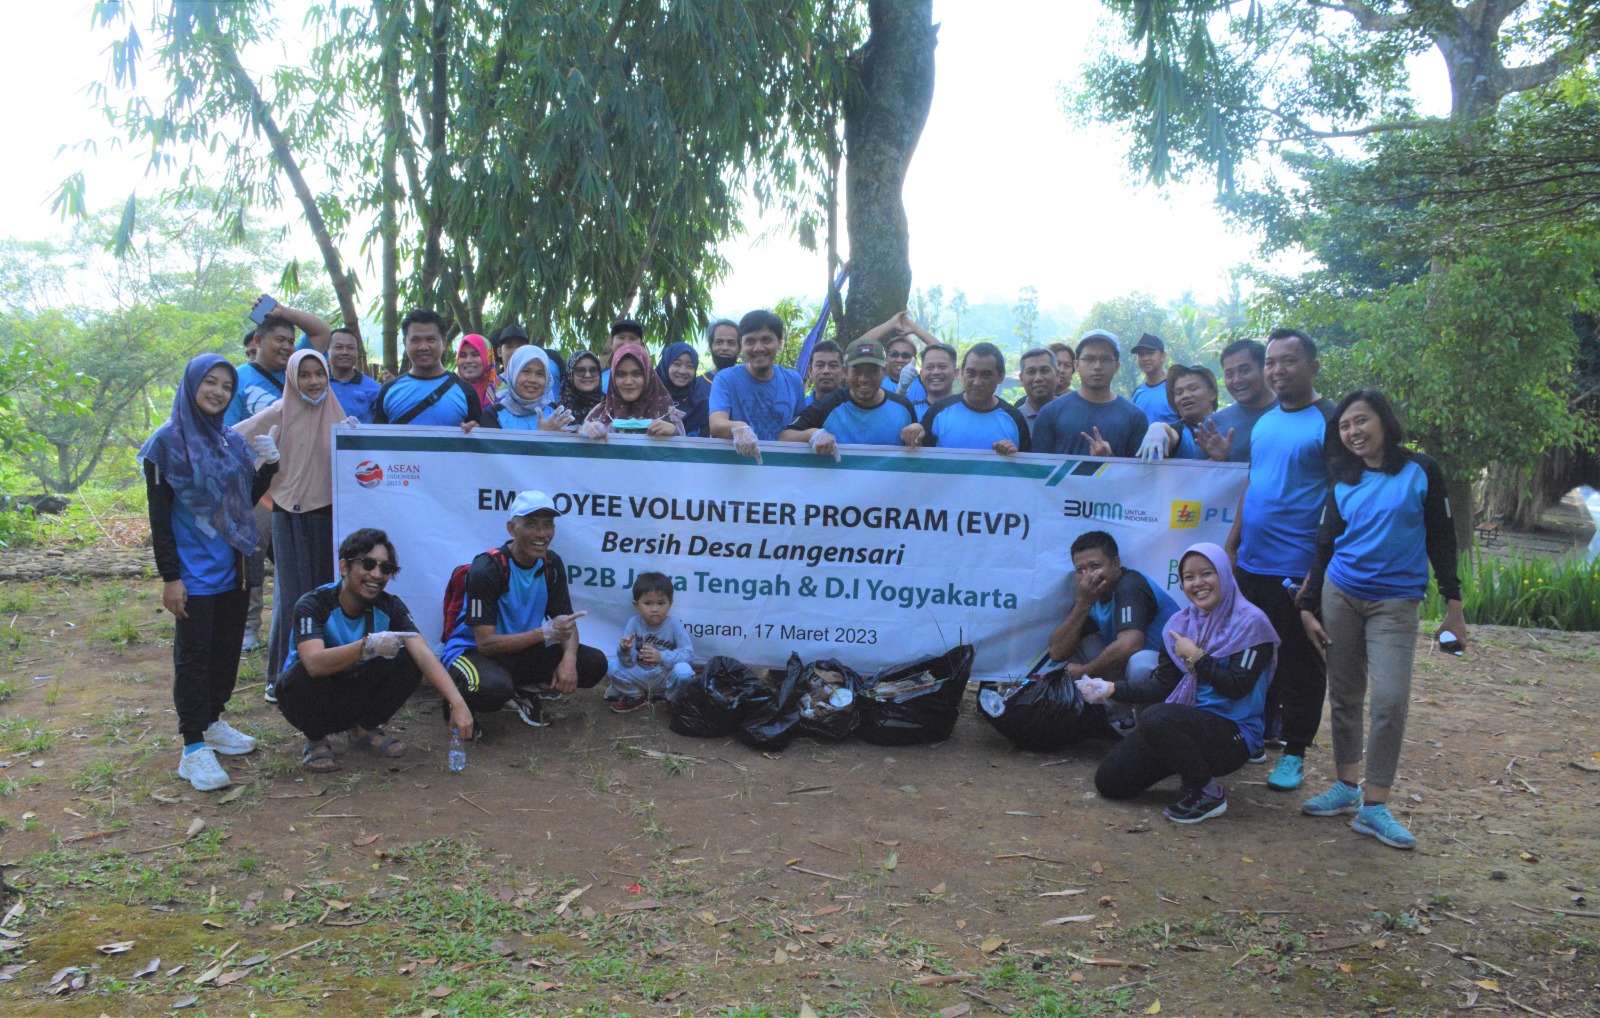 PLN UP2B Jateng & D.I. Yogyakarta EVP, Gelar Program Peduli Alam dan Lingkungan